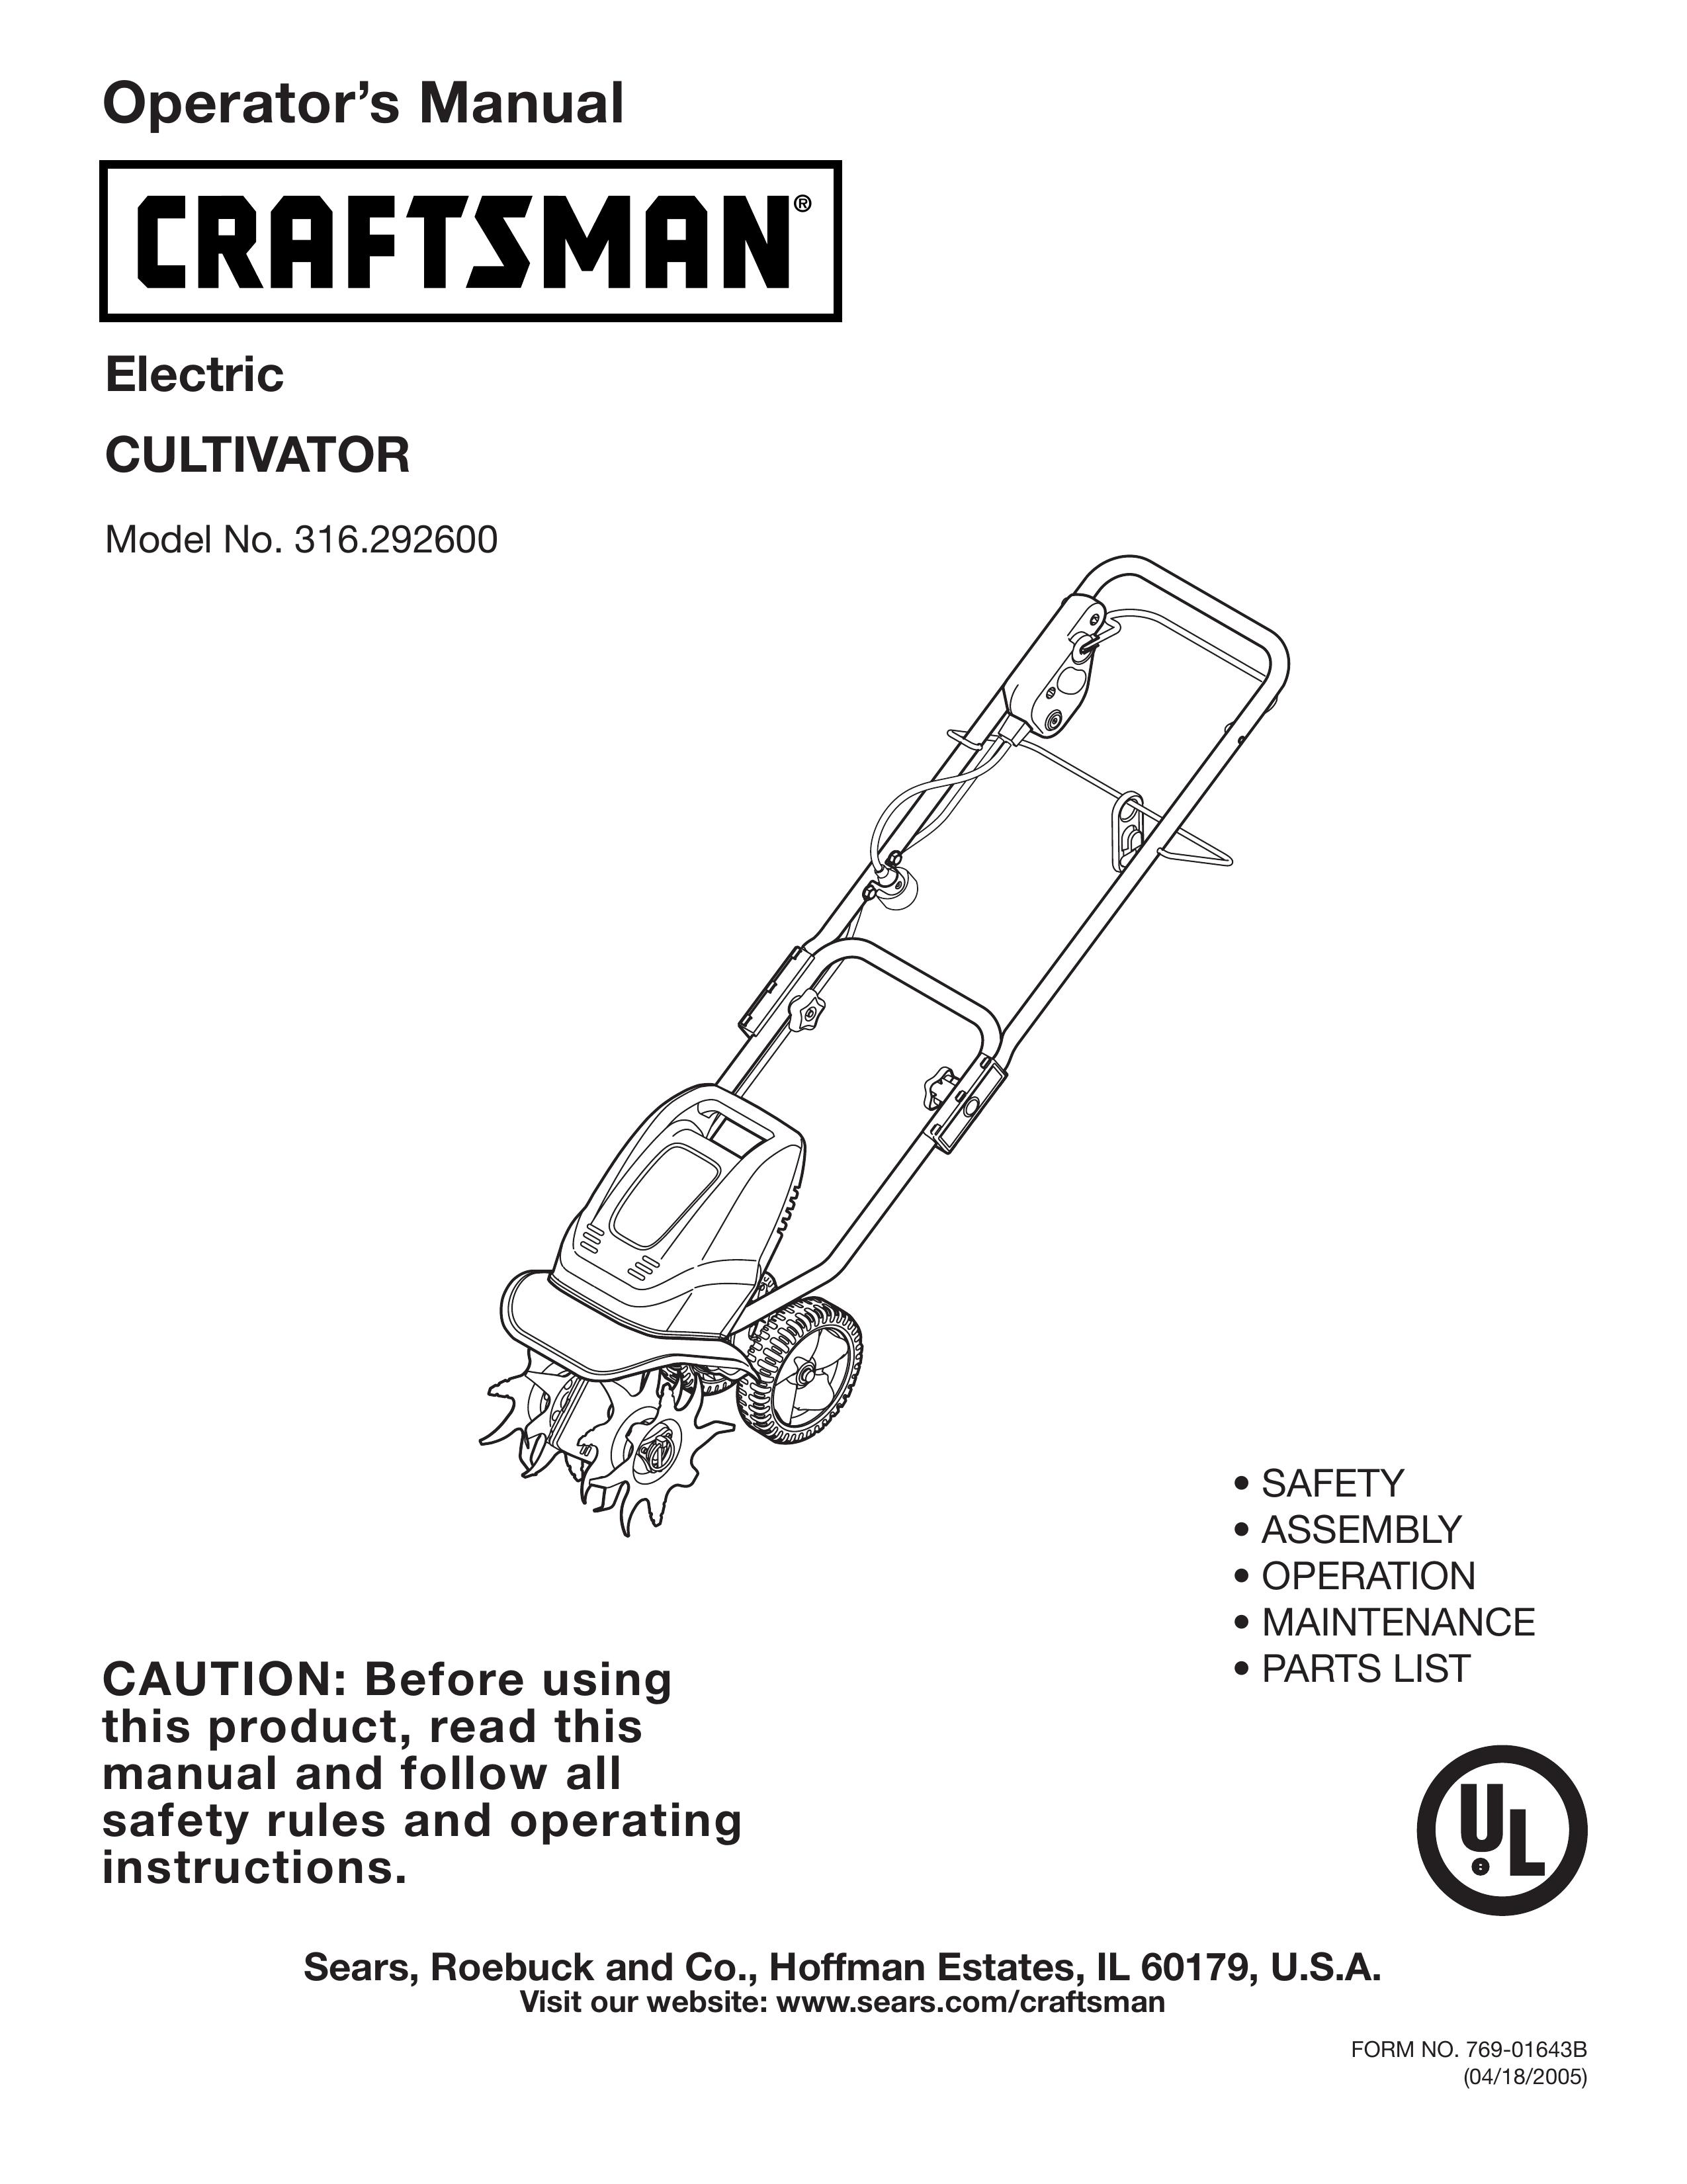 Craftsman 316.2926 Cultivator User Manual